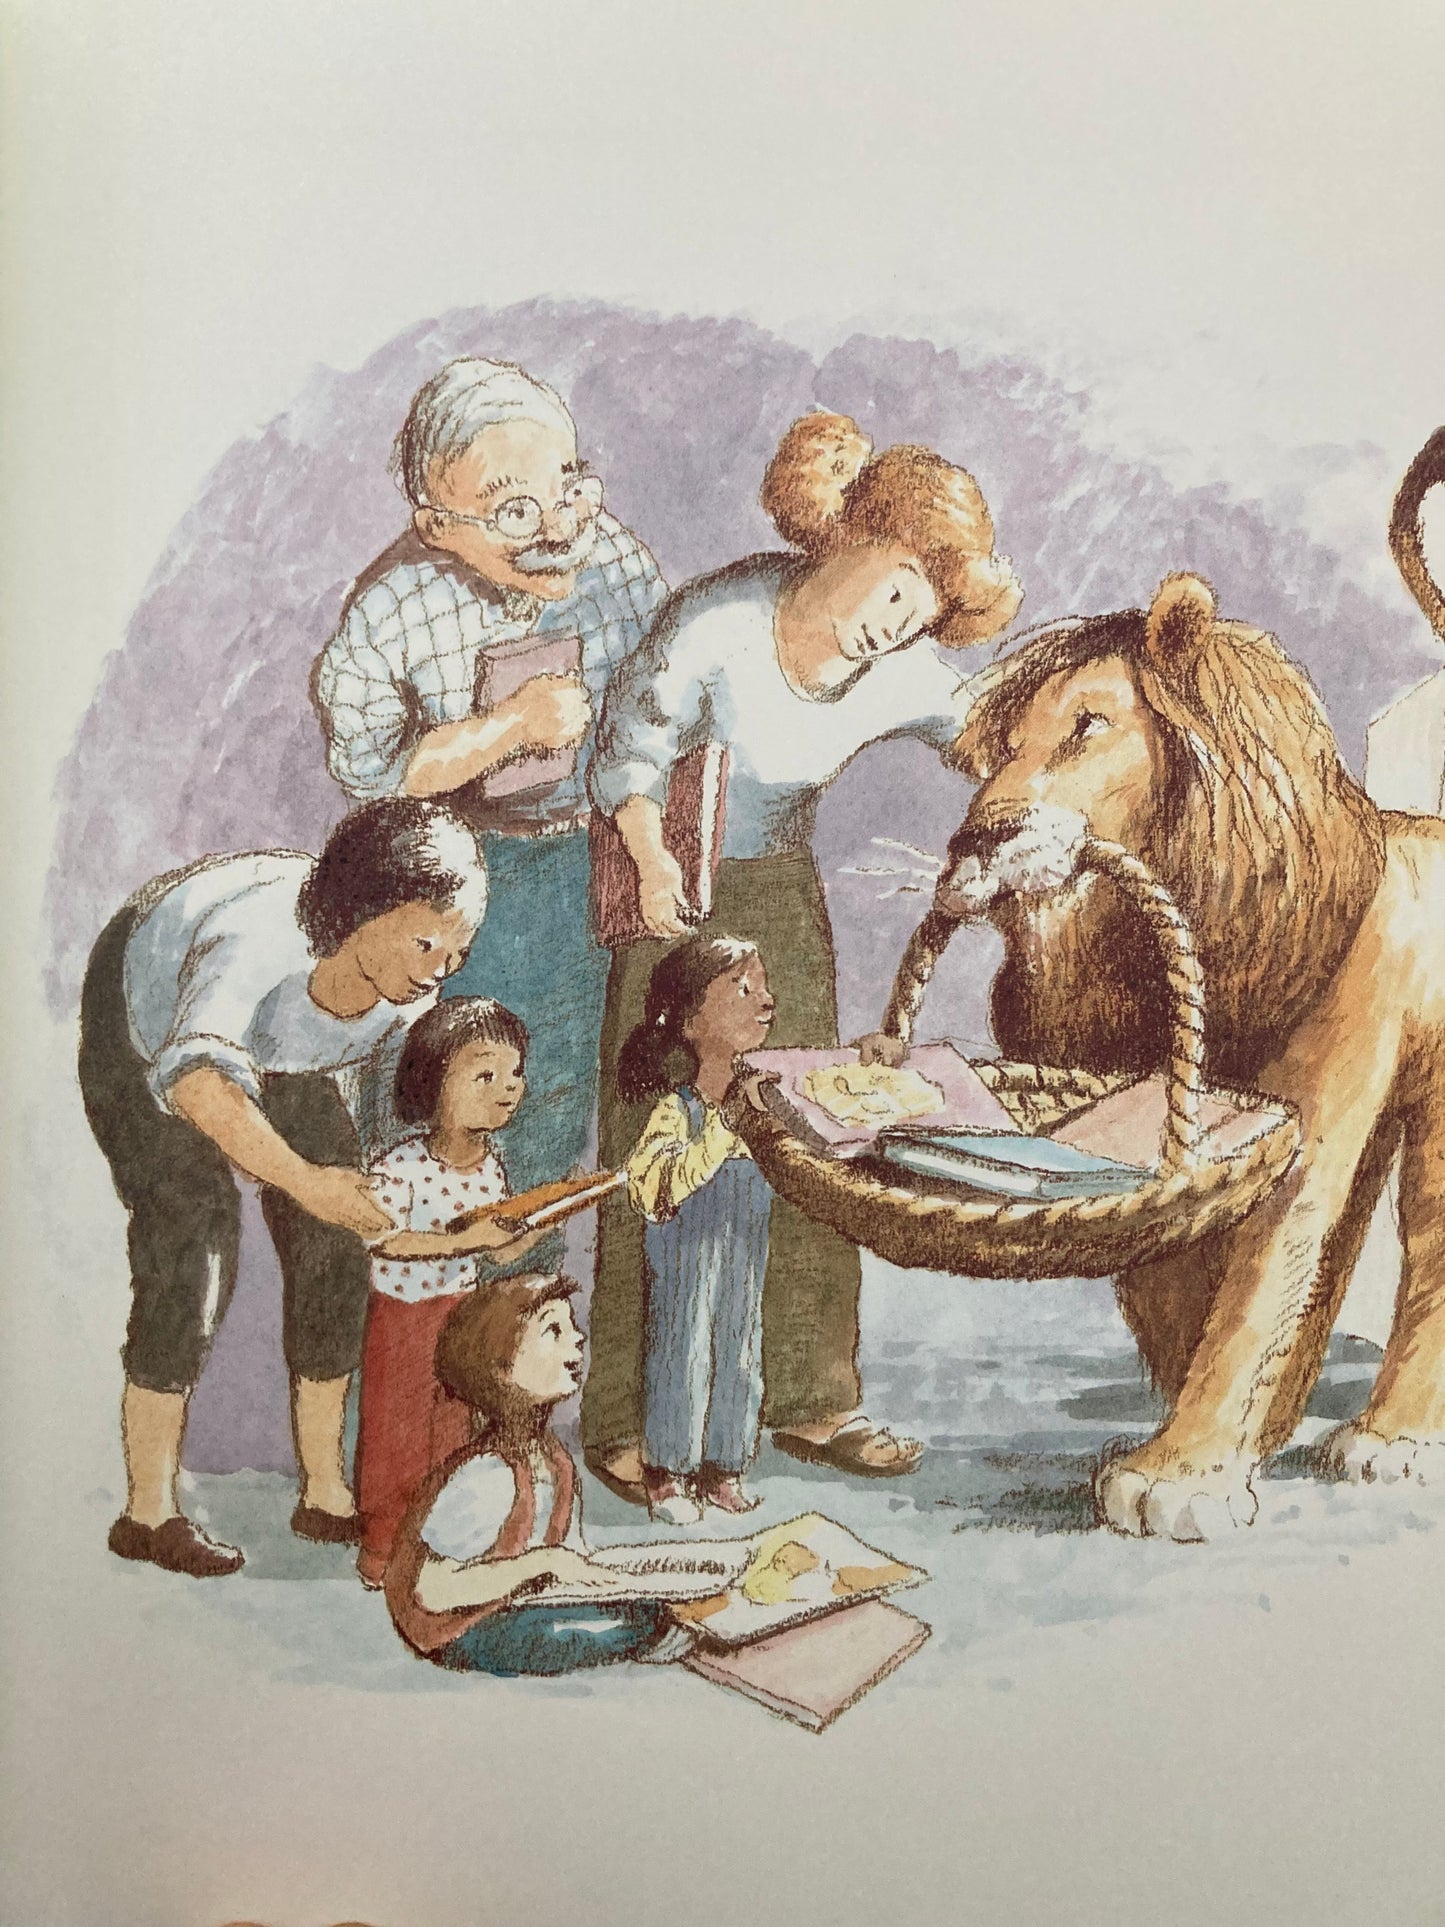 Children's Picture Book - LIBRARY LION